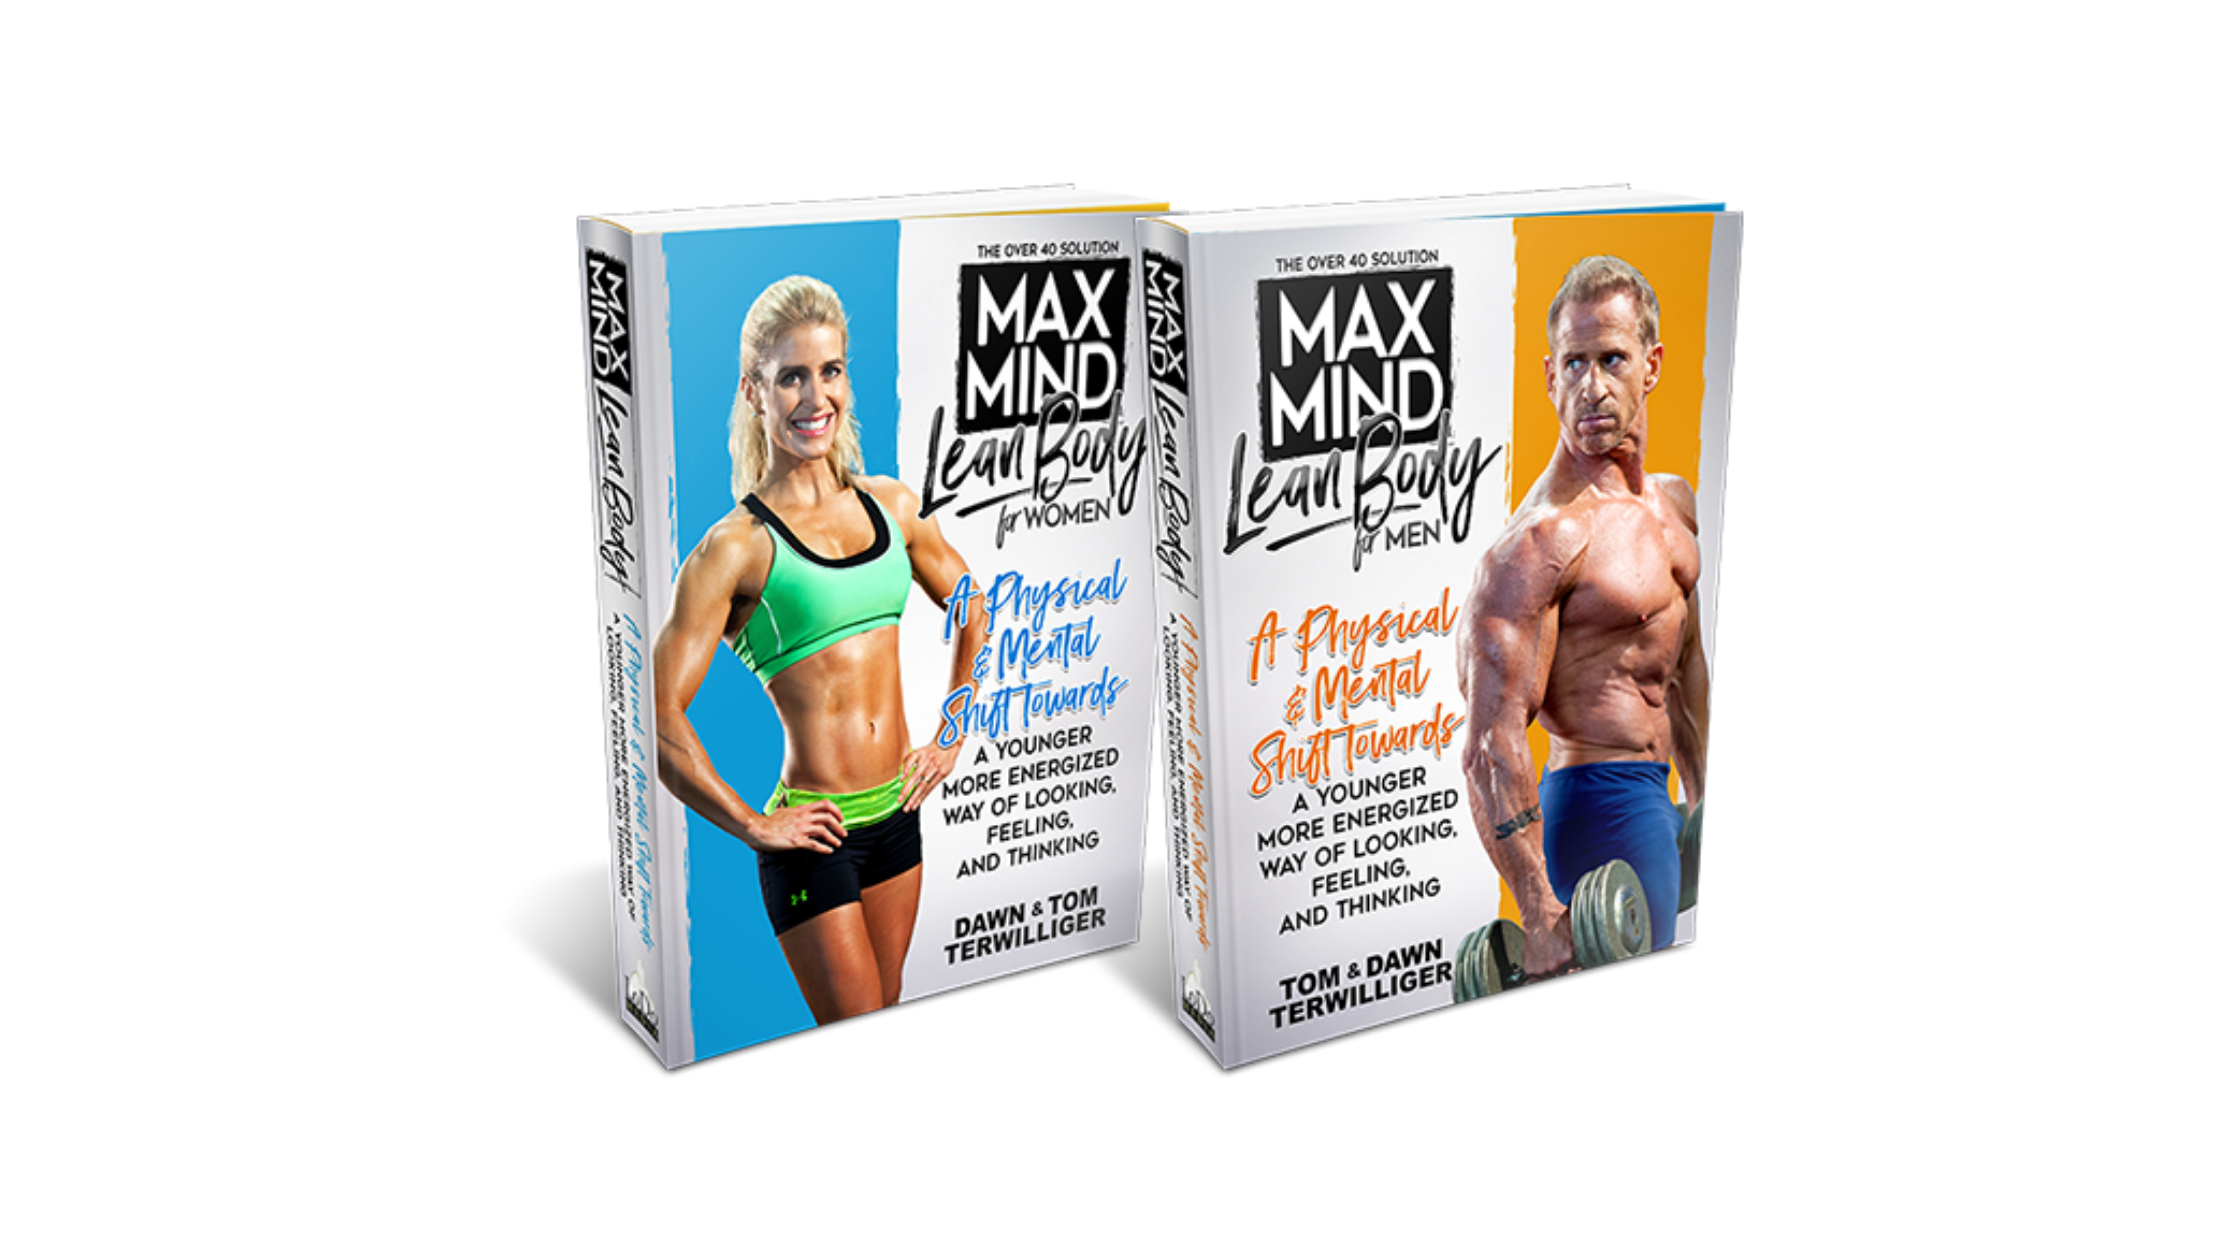 Max Mind Lean Body Reviews